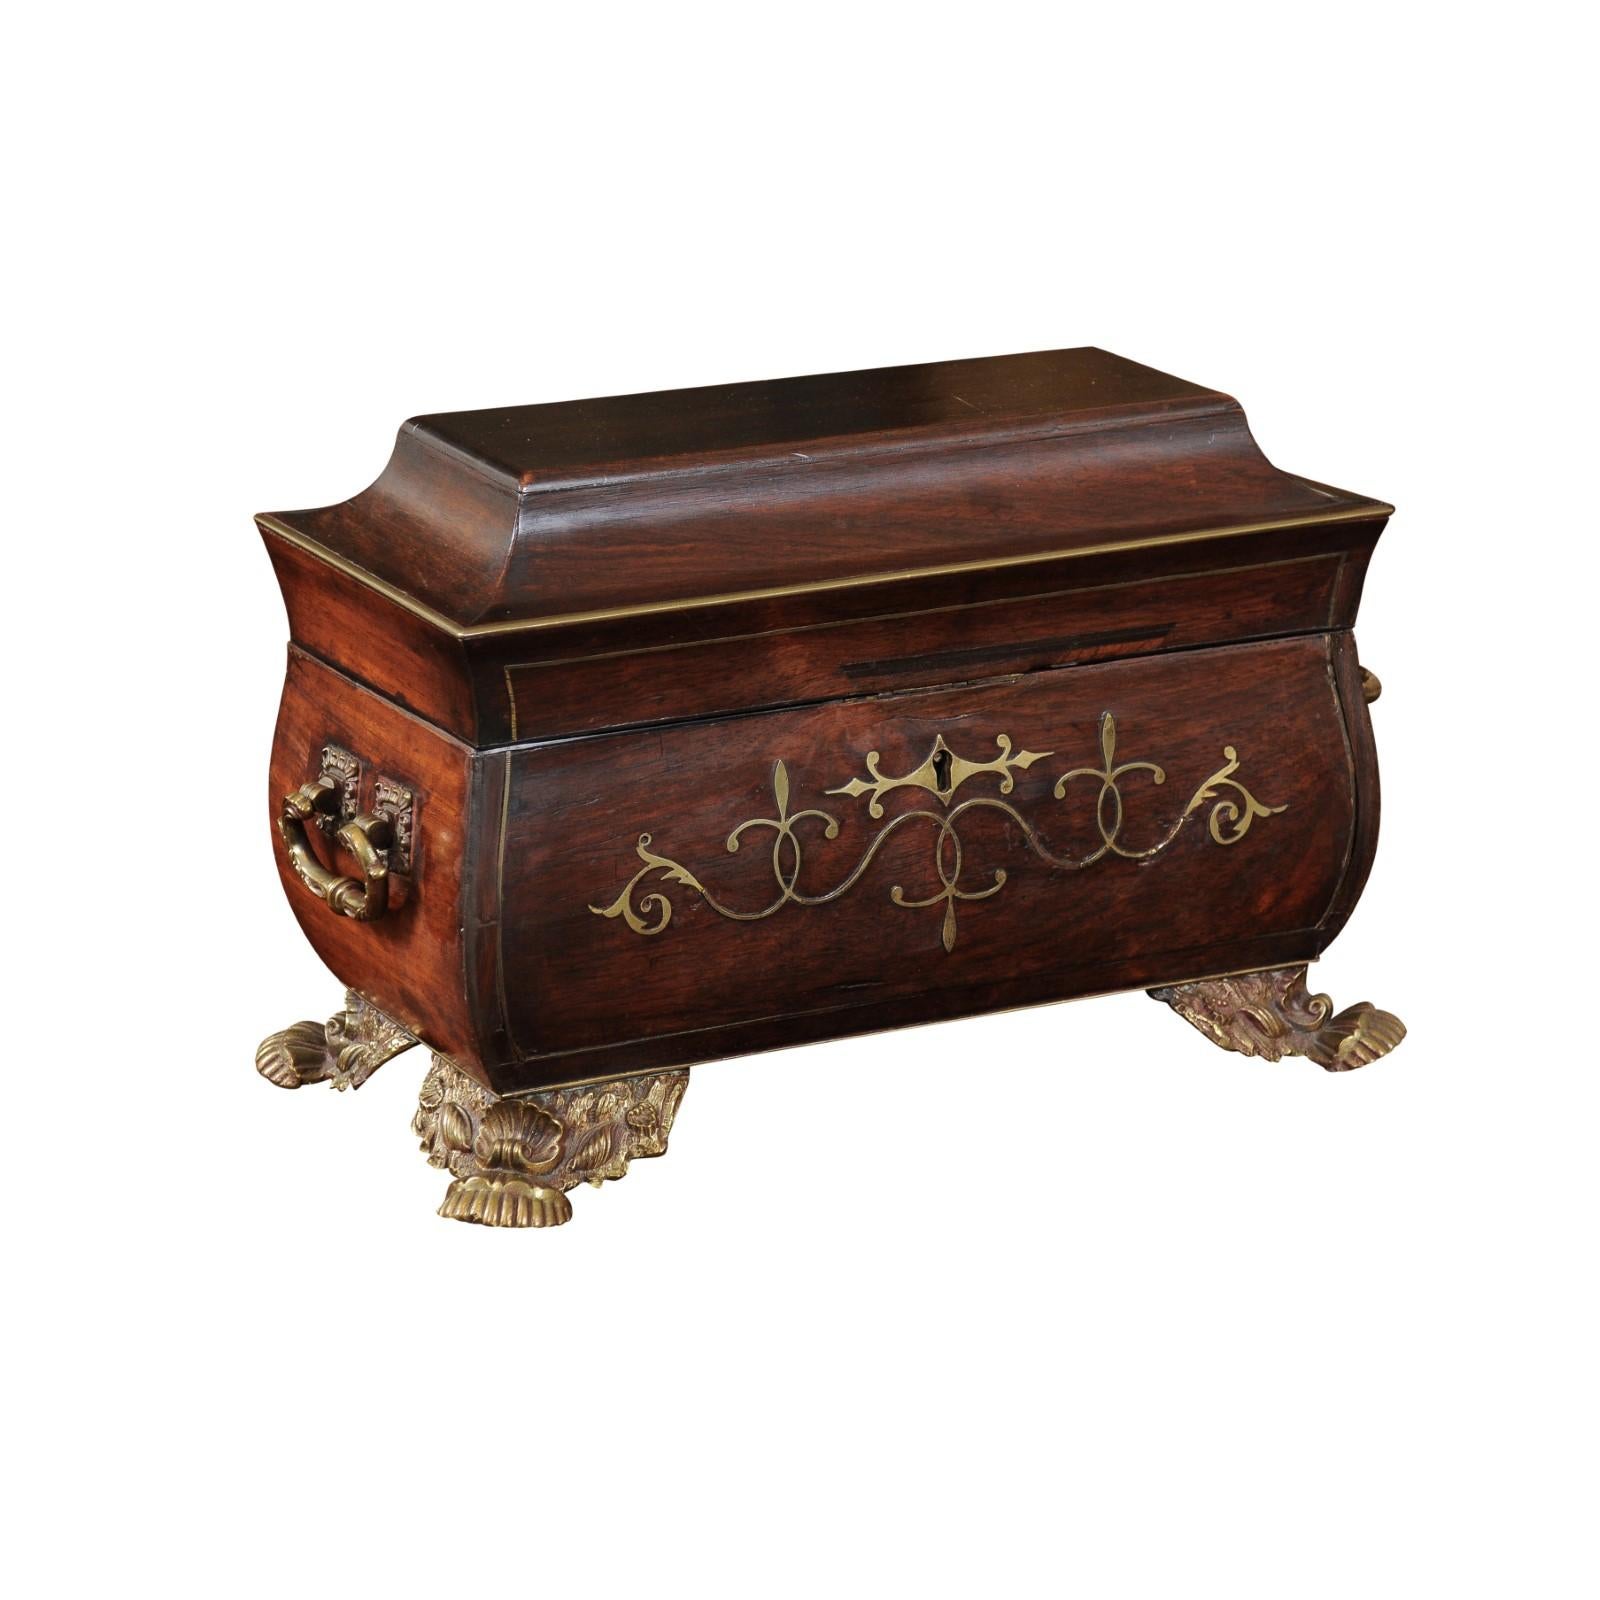 Regency Pagoda Form Work Box with Brass Feet & Inlay, Early 19th Century England